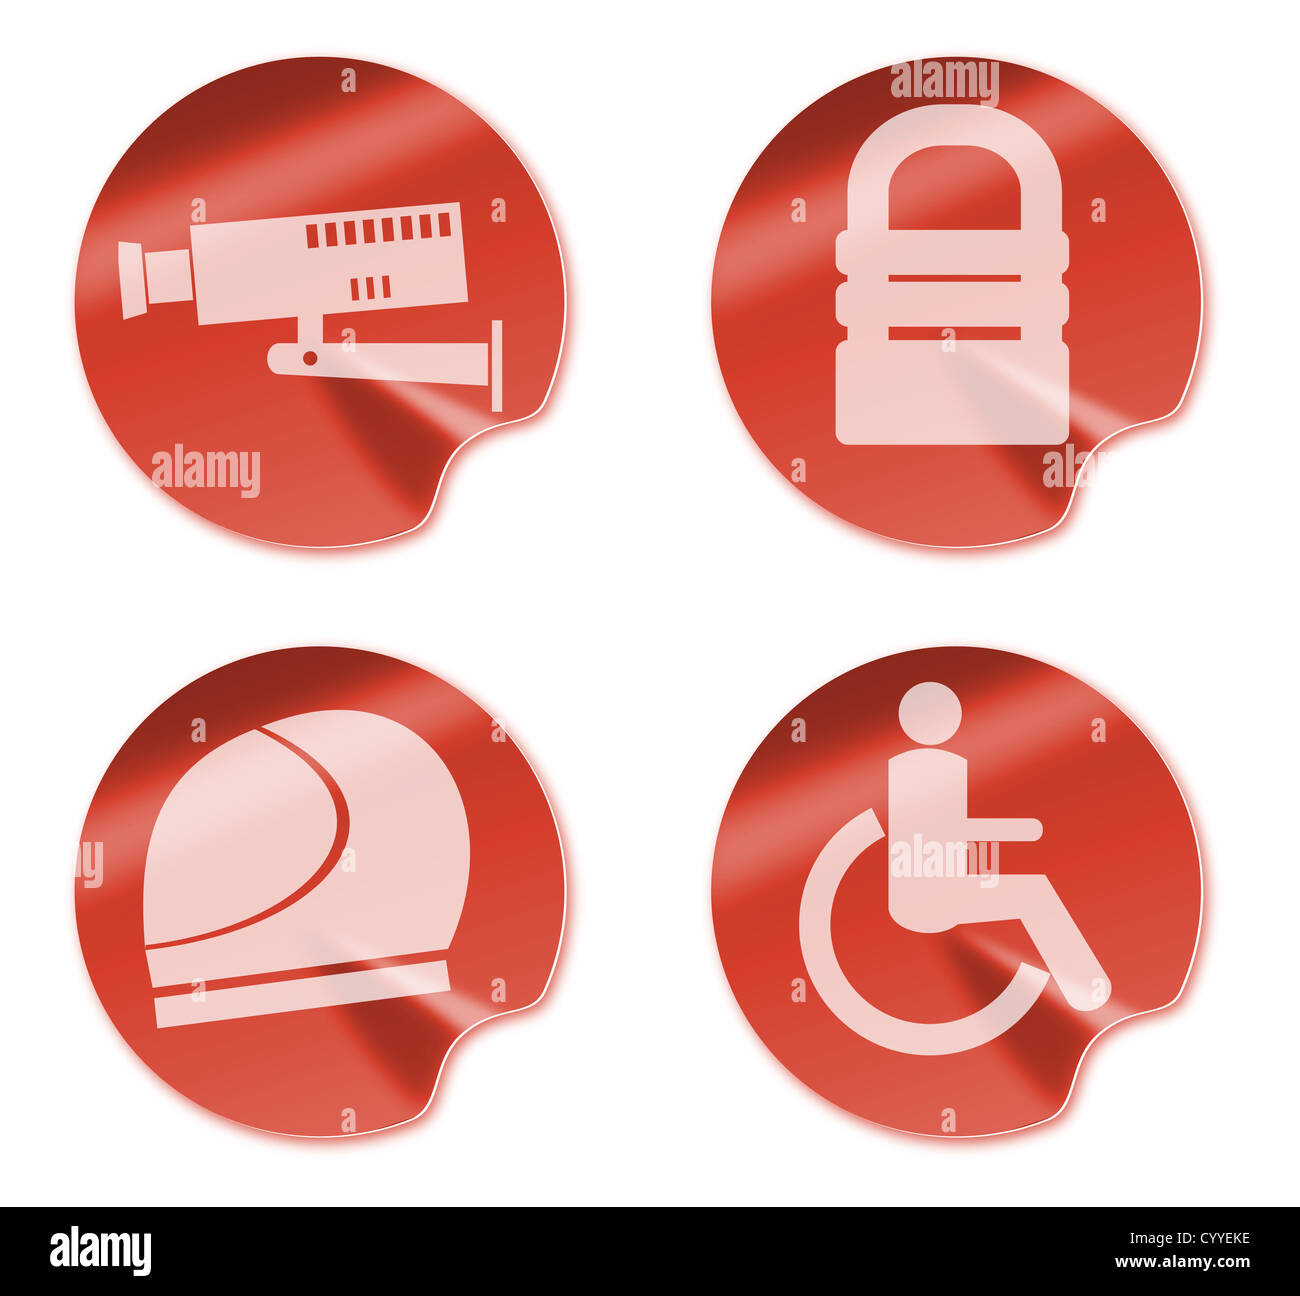 Illustration of icons showing cctv surveillance camera bike crash helmet padlock mobility wheelchair on isolated background. Stock Photo